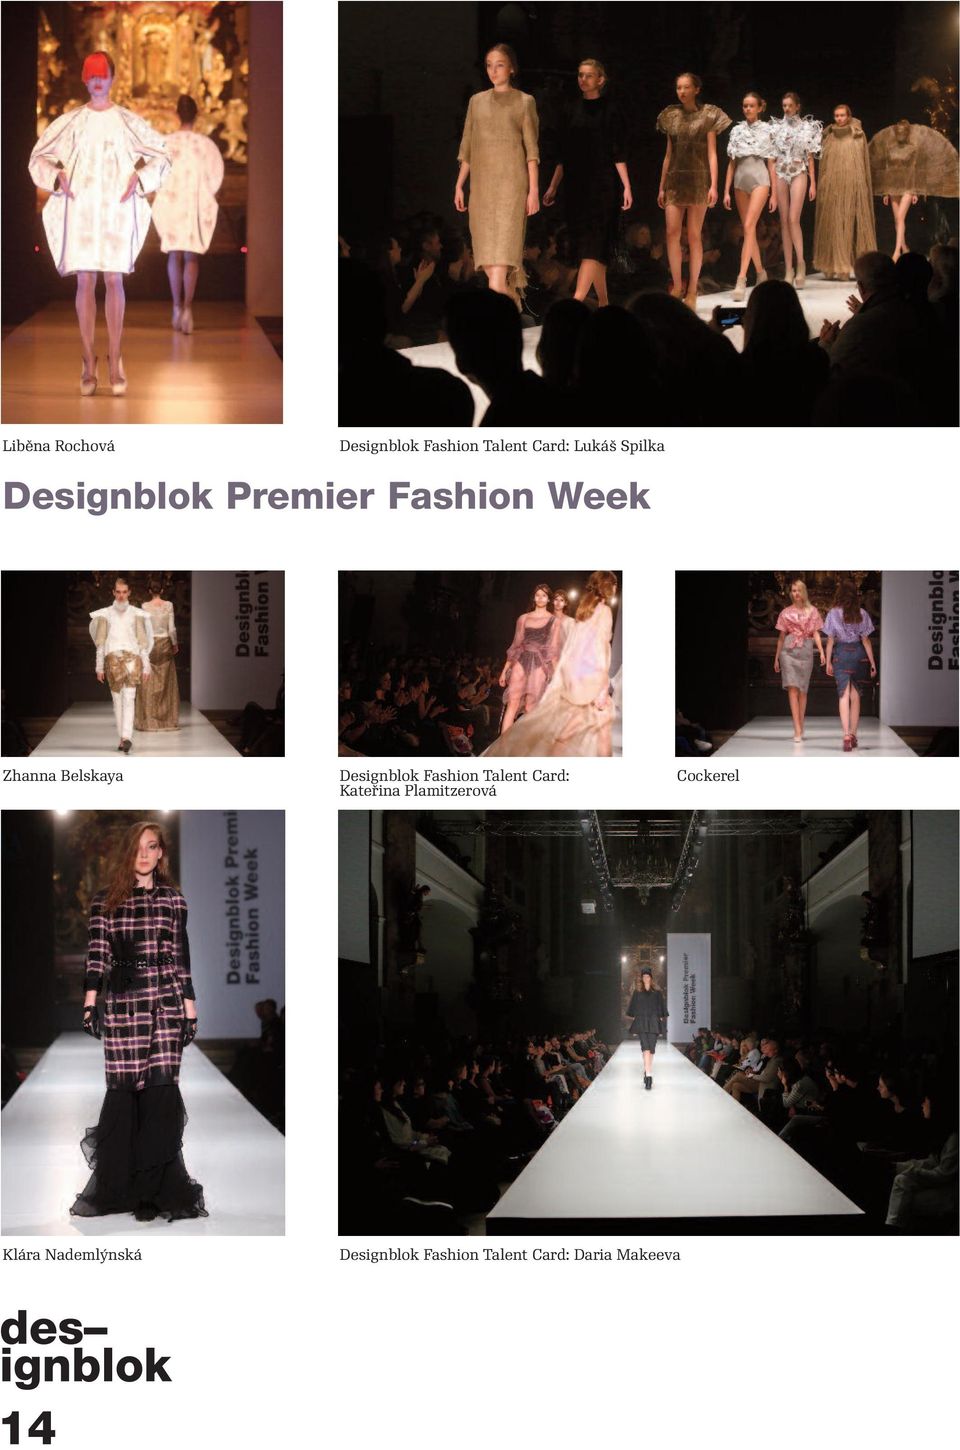 Designblok Fashion Talent Card: Kateřina Plamitzerová